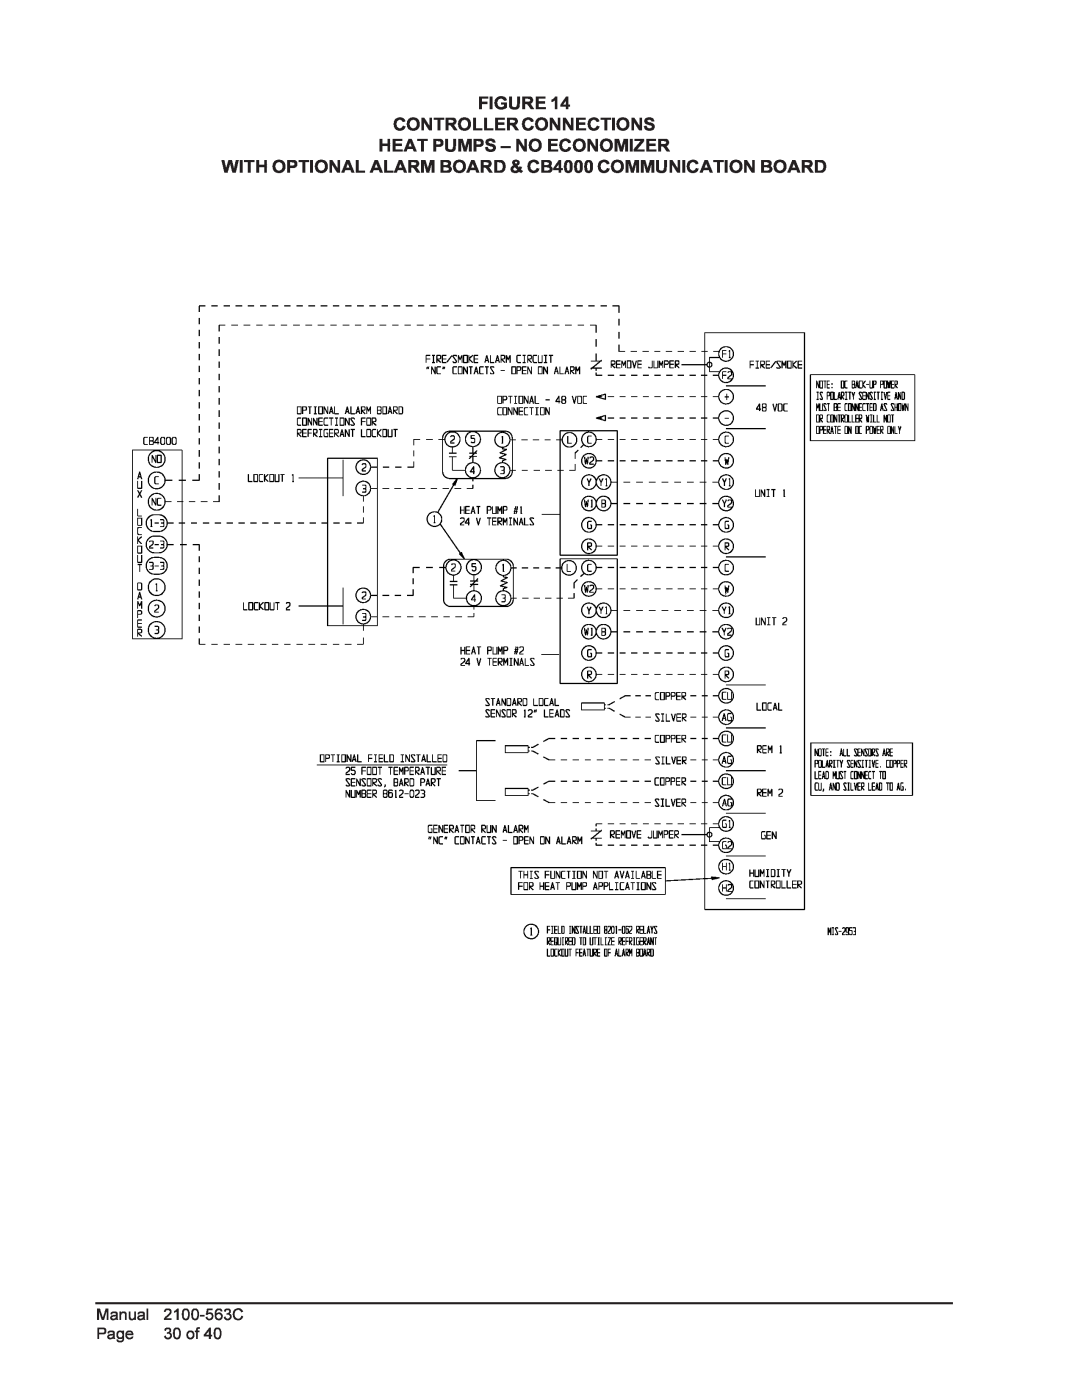 Bard MC4000 Figure Controllerconnections, Heat Pumps - No Economizer, Manual, Page, 30 of, 2100-563C 